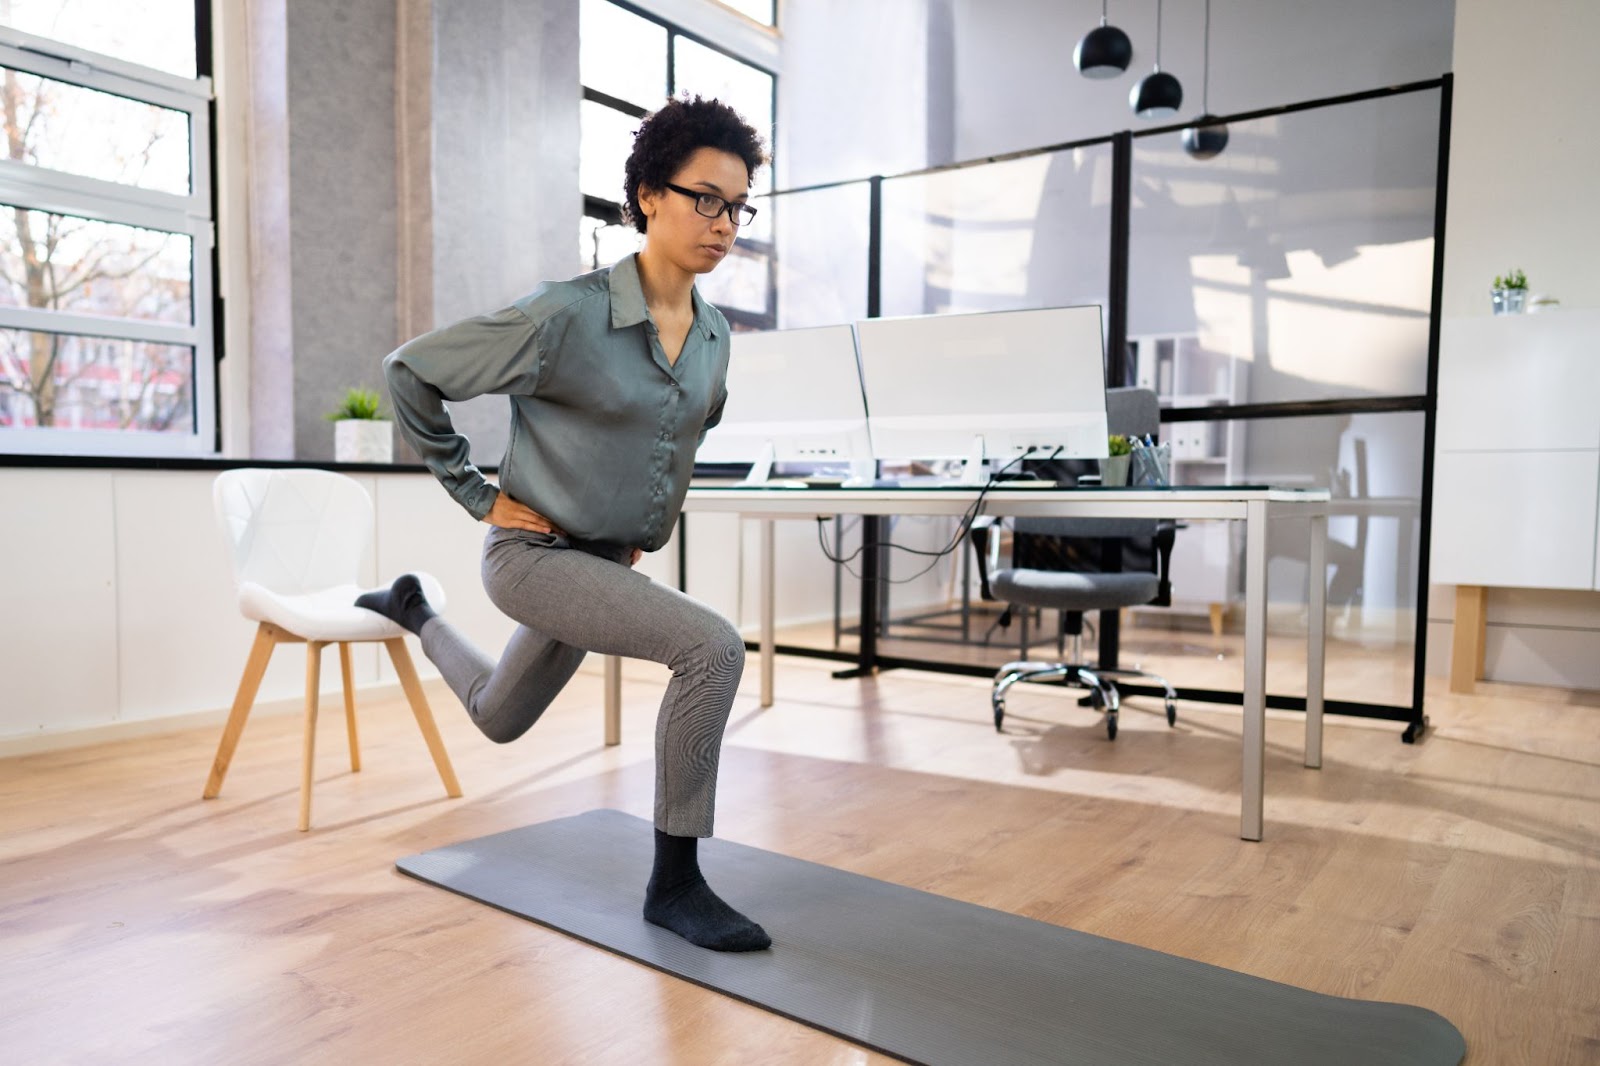 Woman in an office setting performing a single-leg split squat